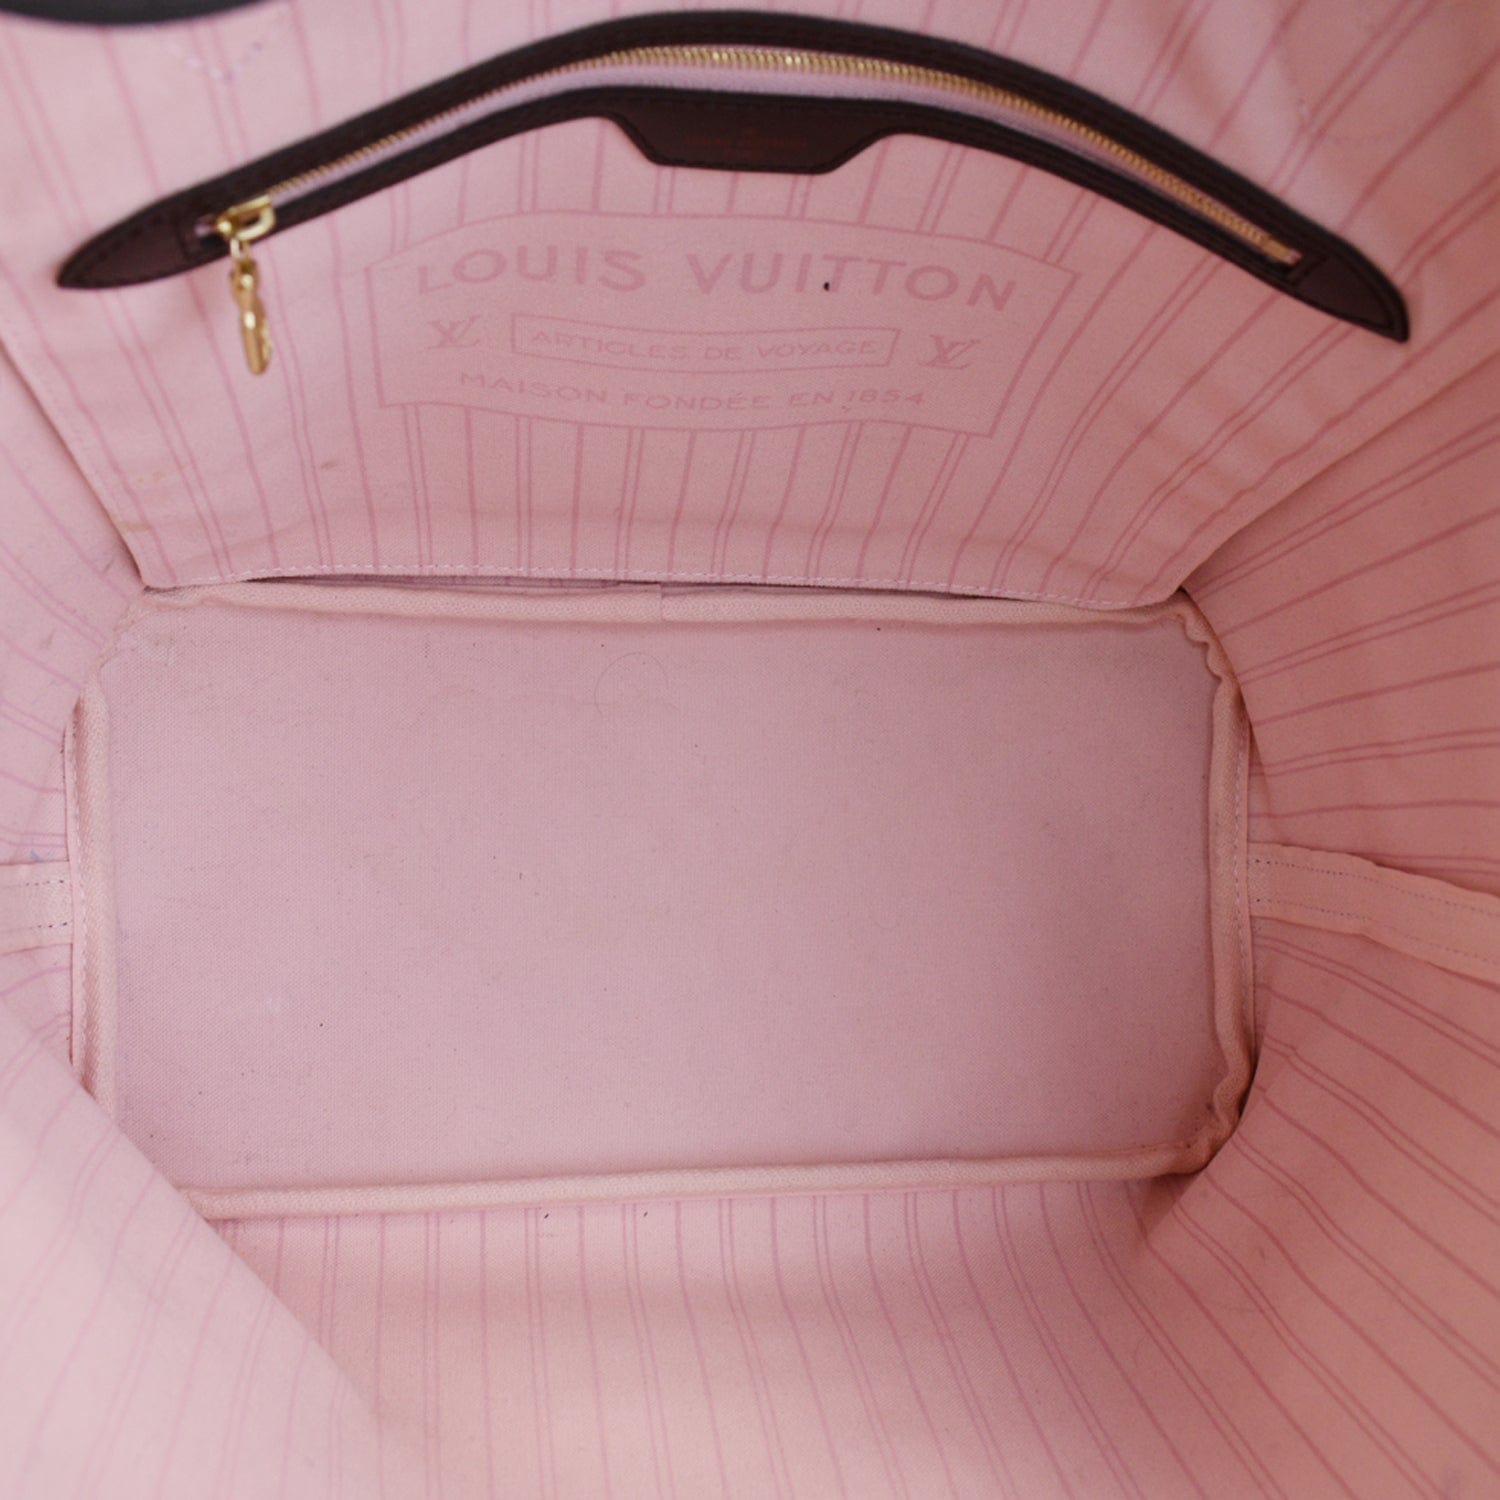 Authentic Louis Vuitton Neverfull Mm Damier Ebene Pink Ballerina